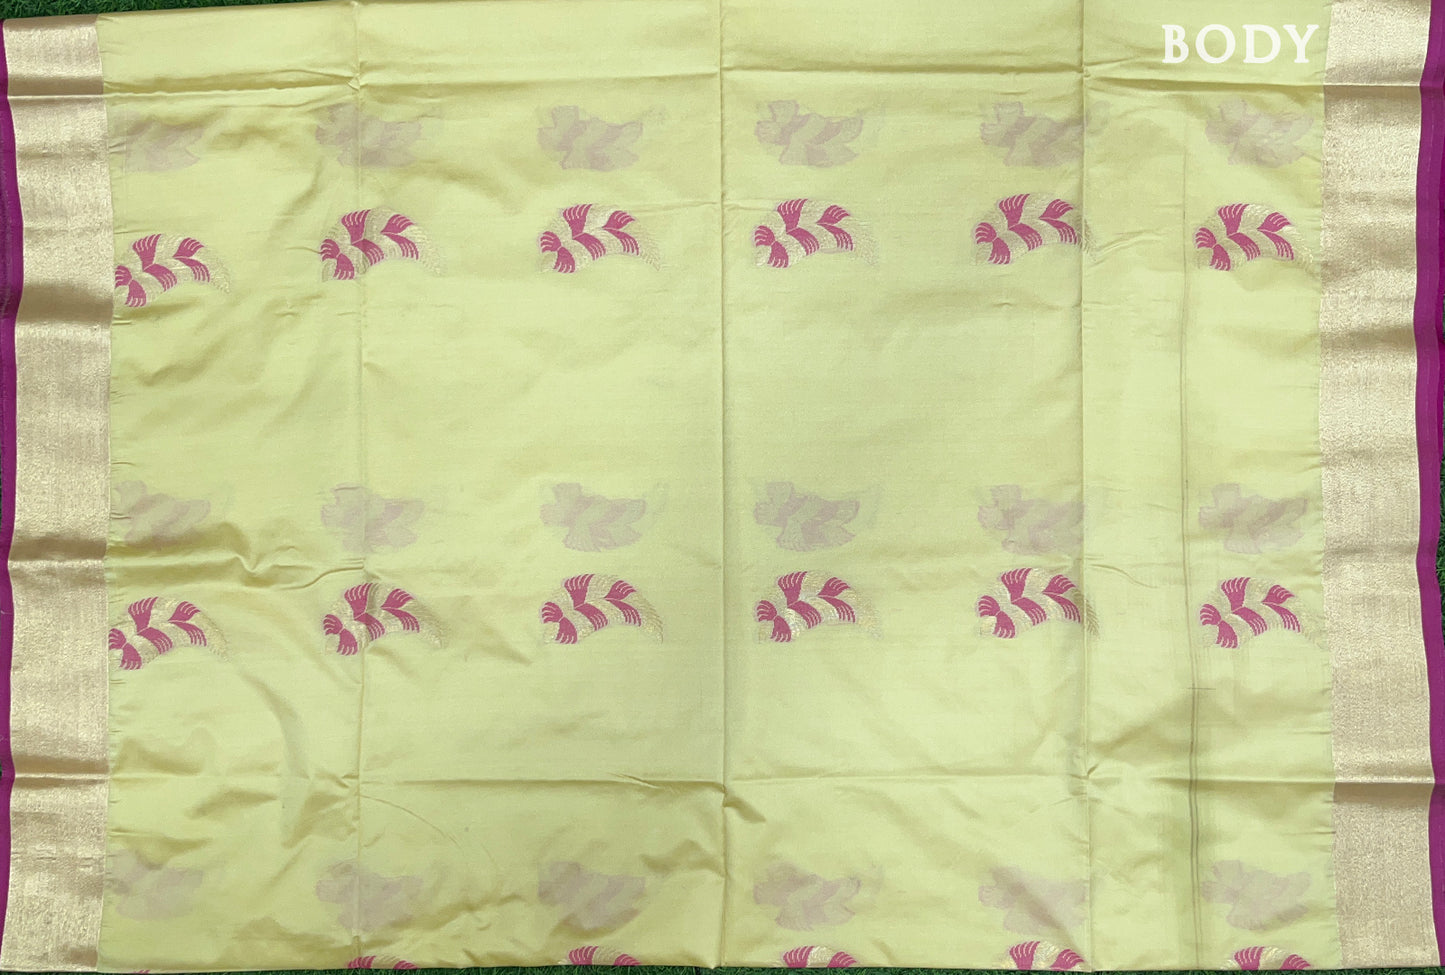 Cream with Rani Pink Kanchipuram semi soft silk saree